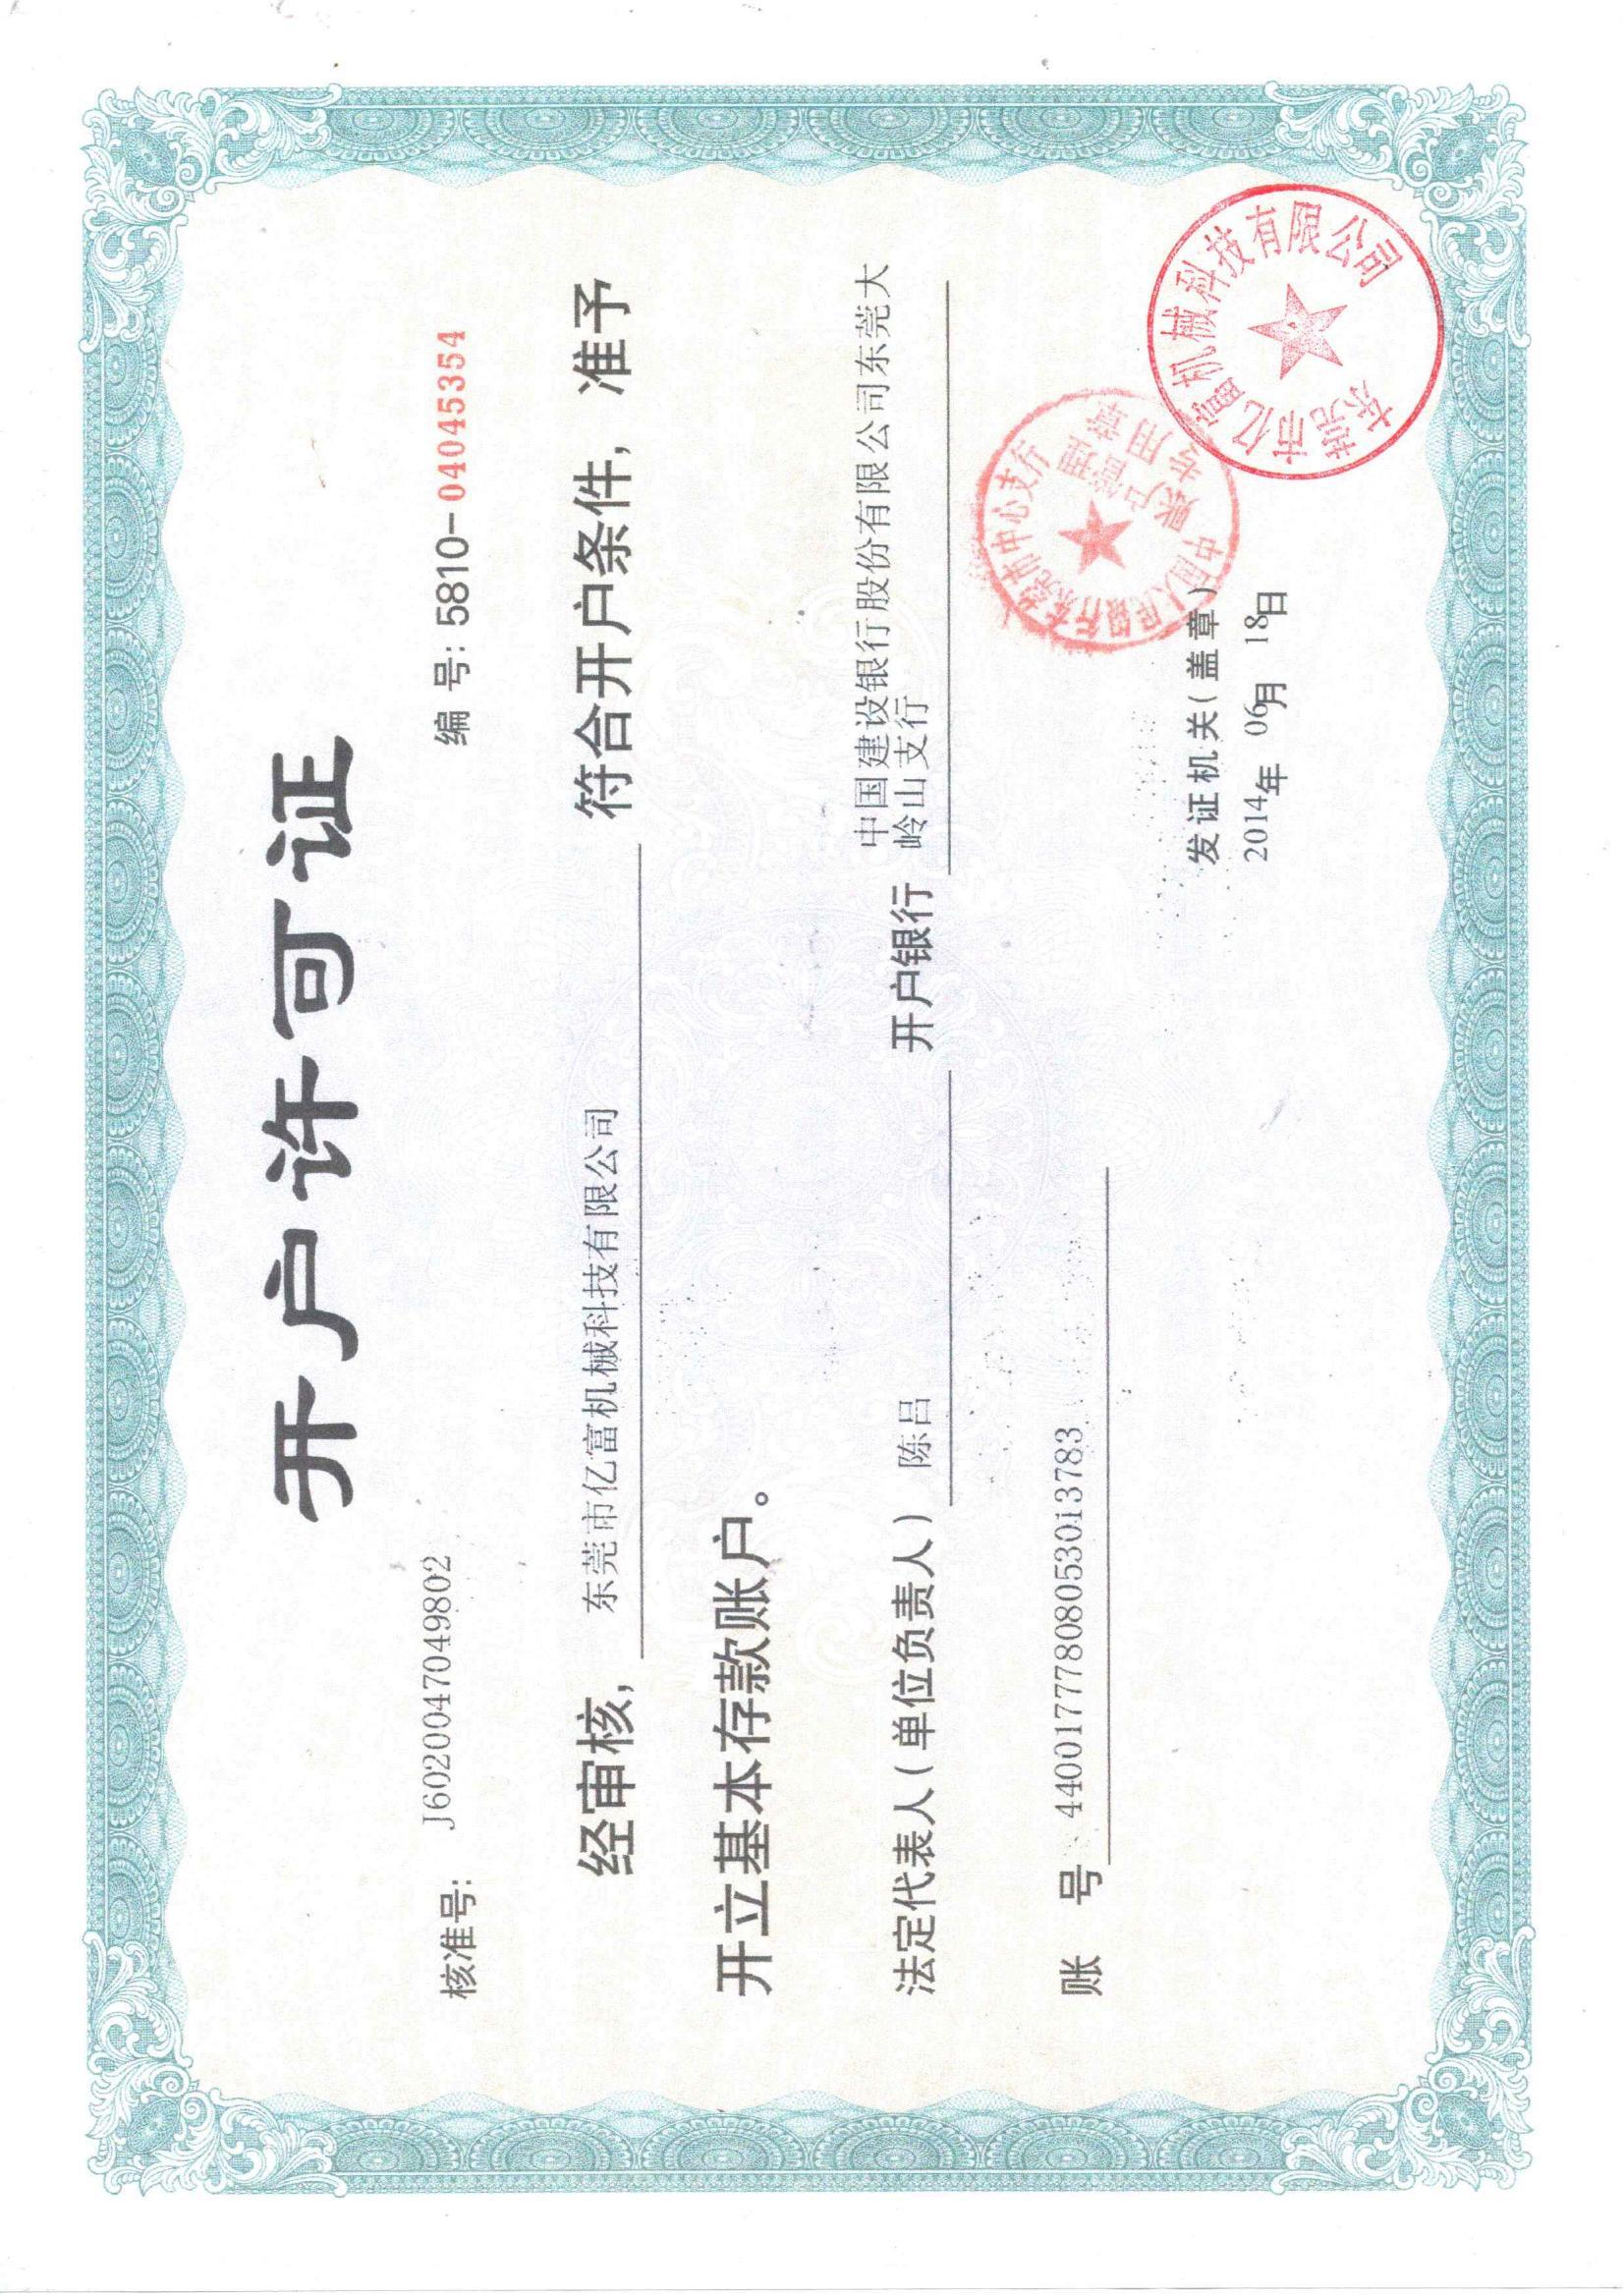 Account opening permit